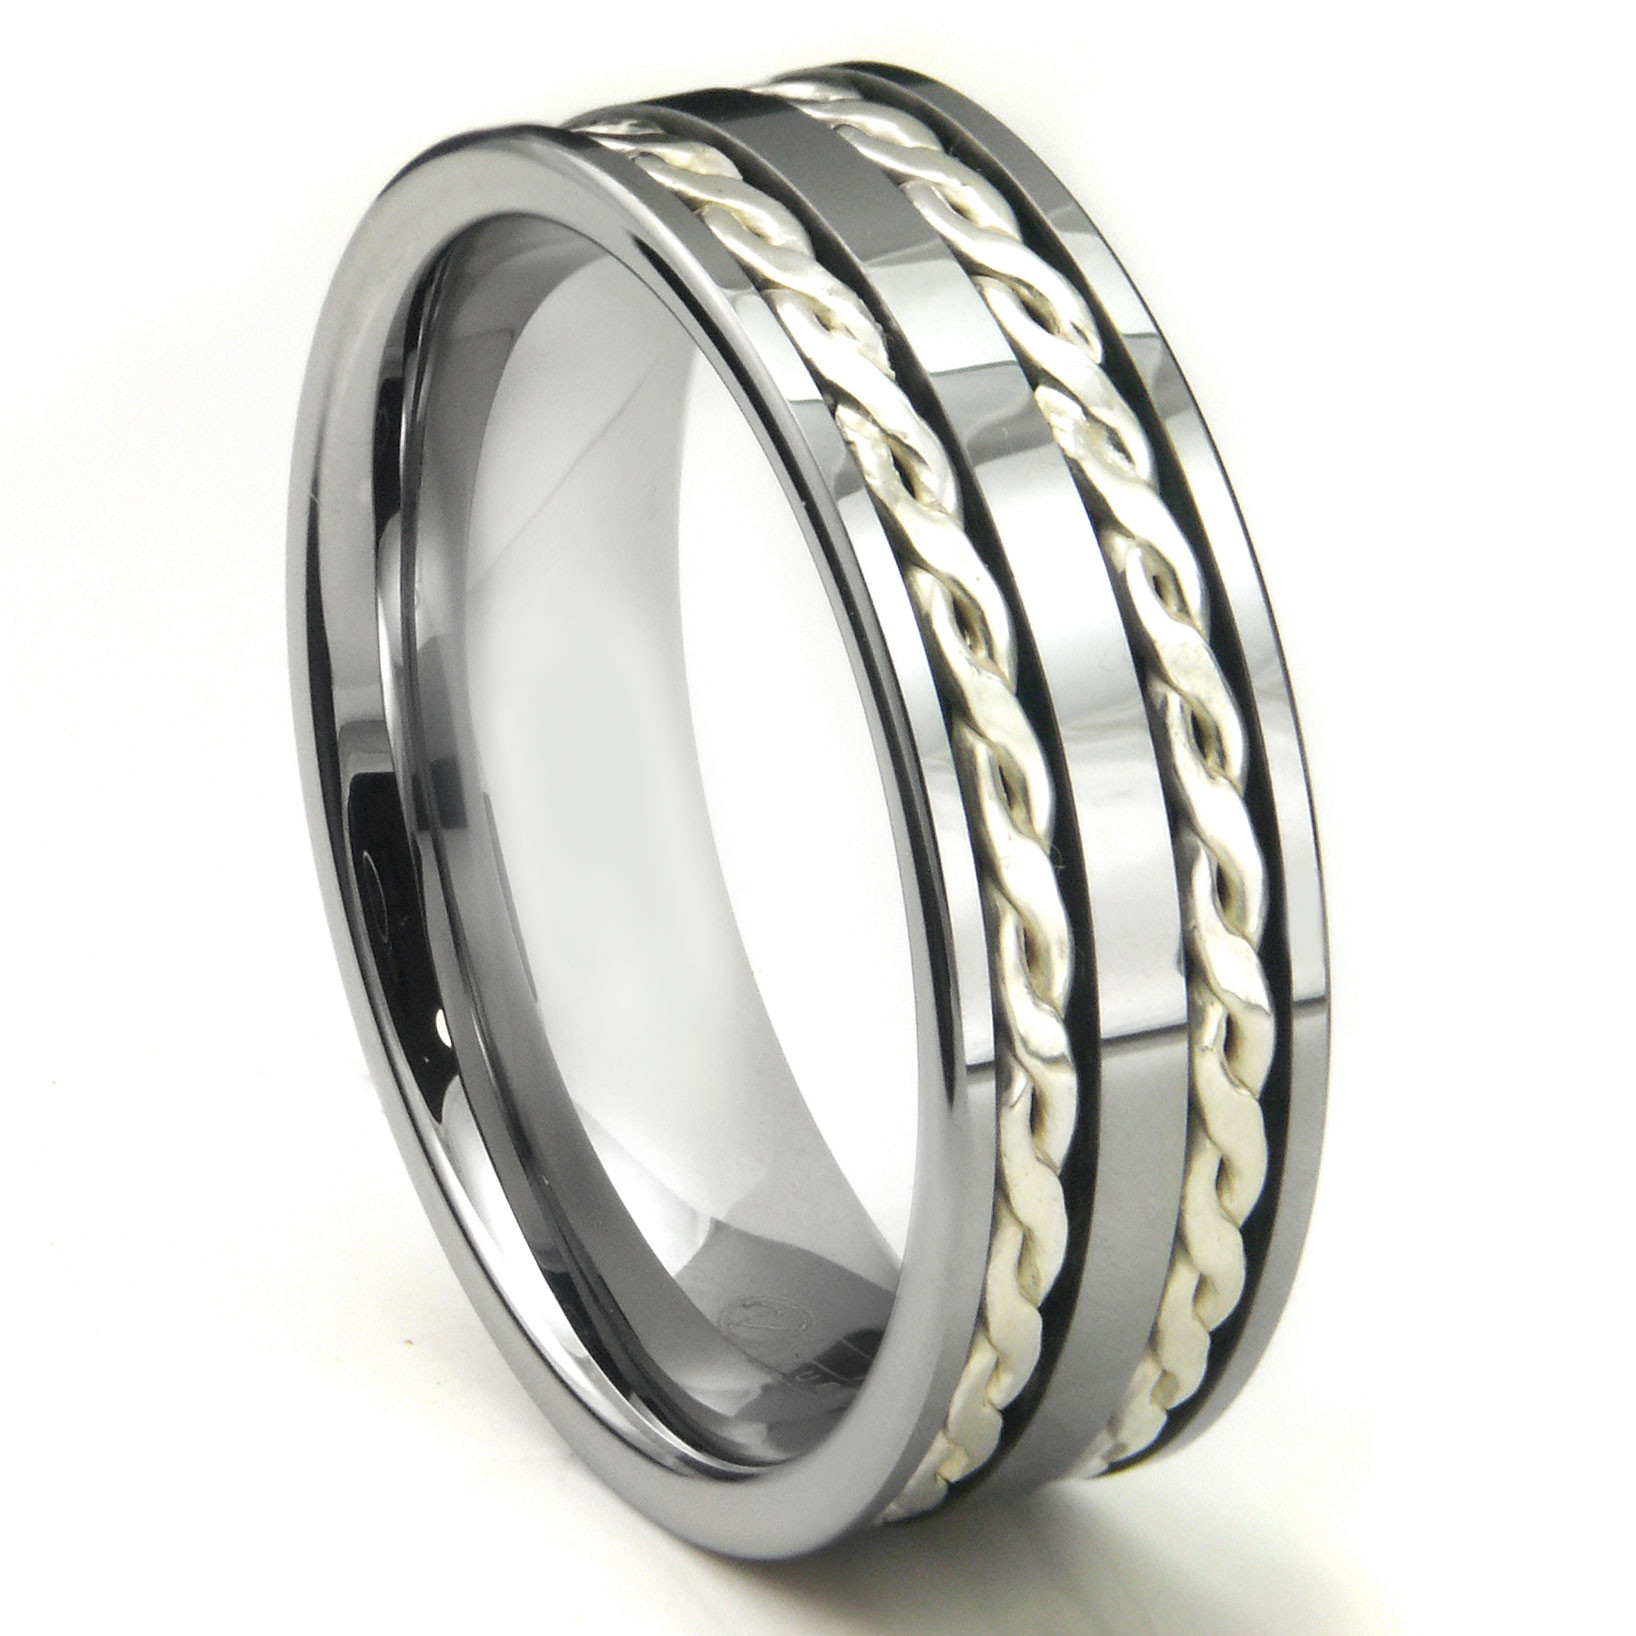 Tungsten Carbide Wedding Ring
 Tungsten Carbide Silver Rope Wedding Band Ring